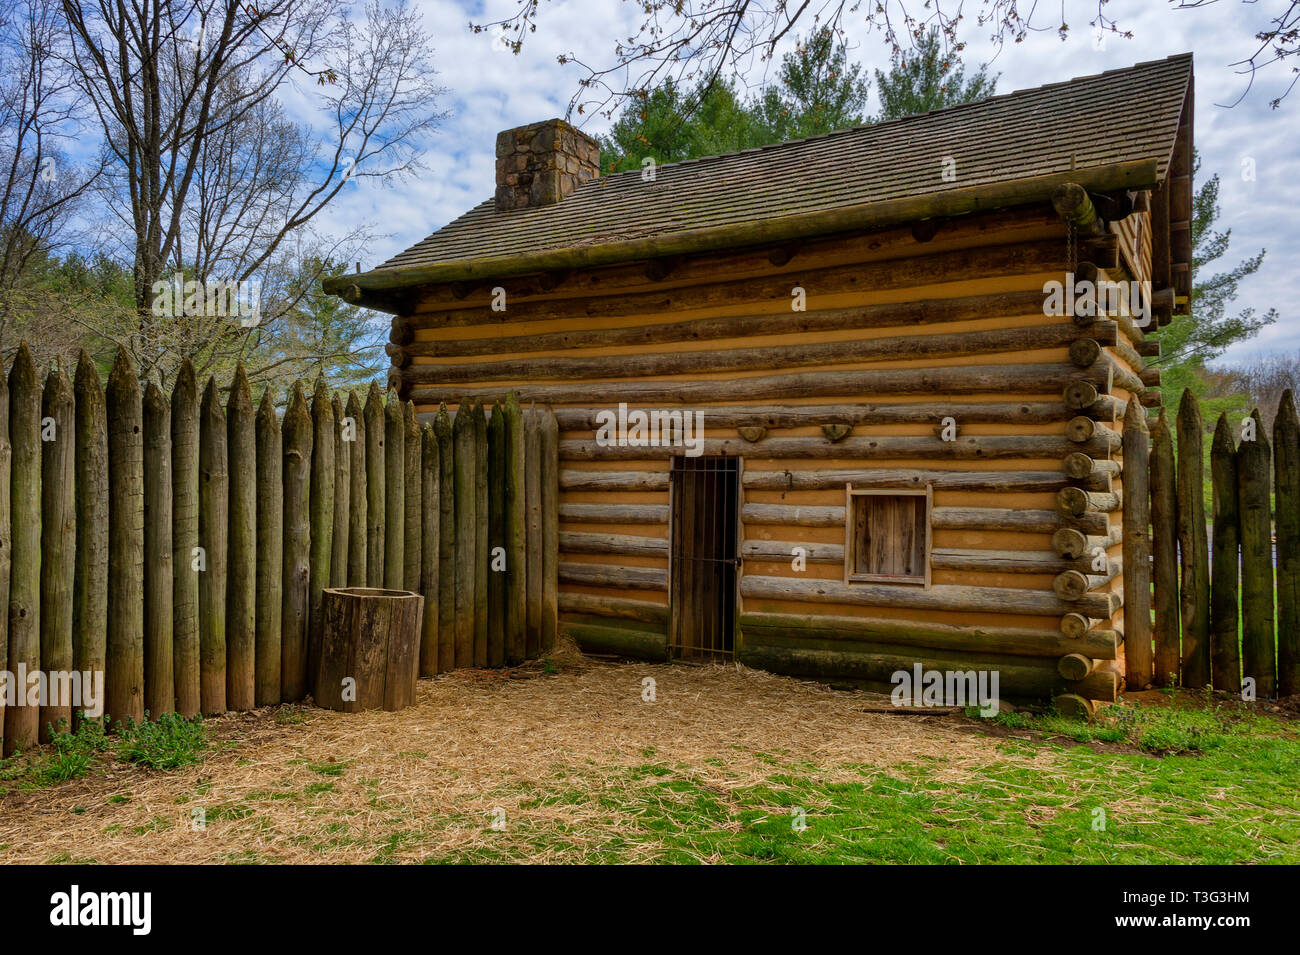 Elizabethton,Tennessee,USA - April 2, 2019: A recreated historical Fort Watauga in Elizabethton, Tennessee Stock Photo